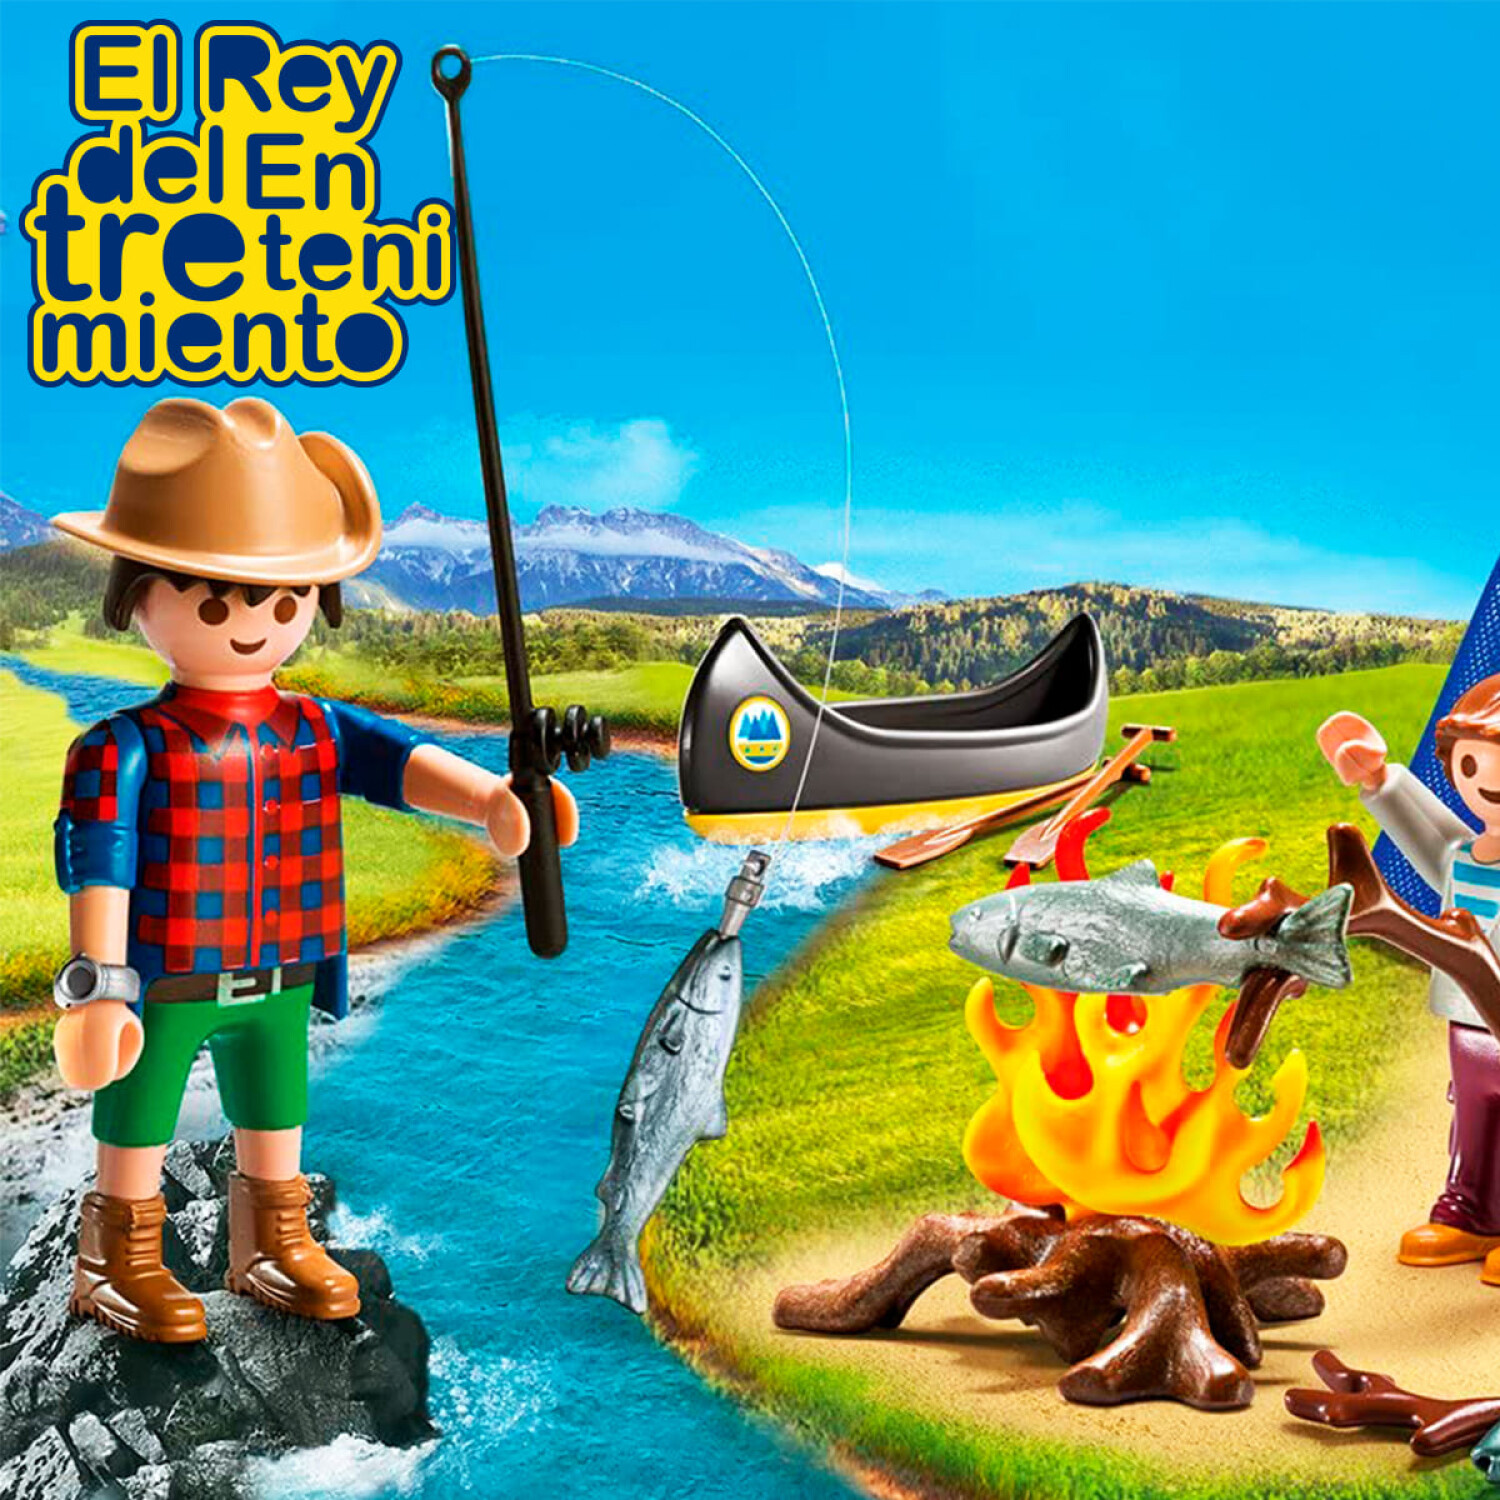 Playmobil 9323 Family Fun - Maletin Pesca Y Camping